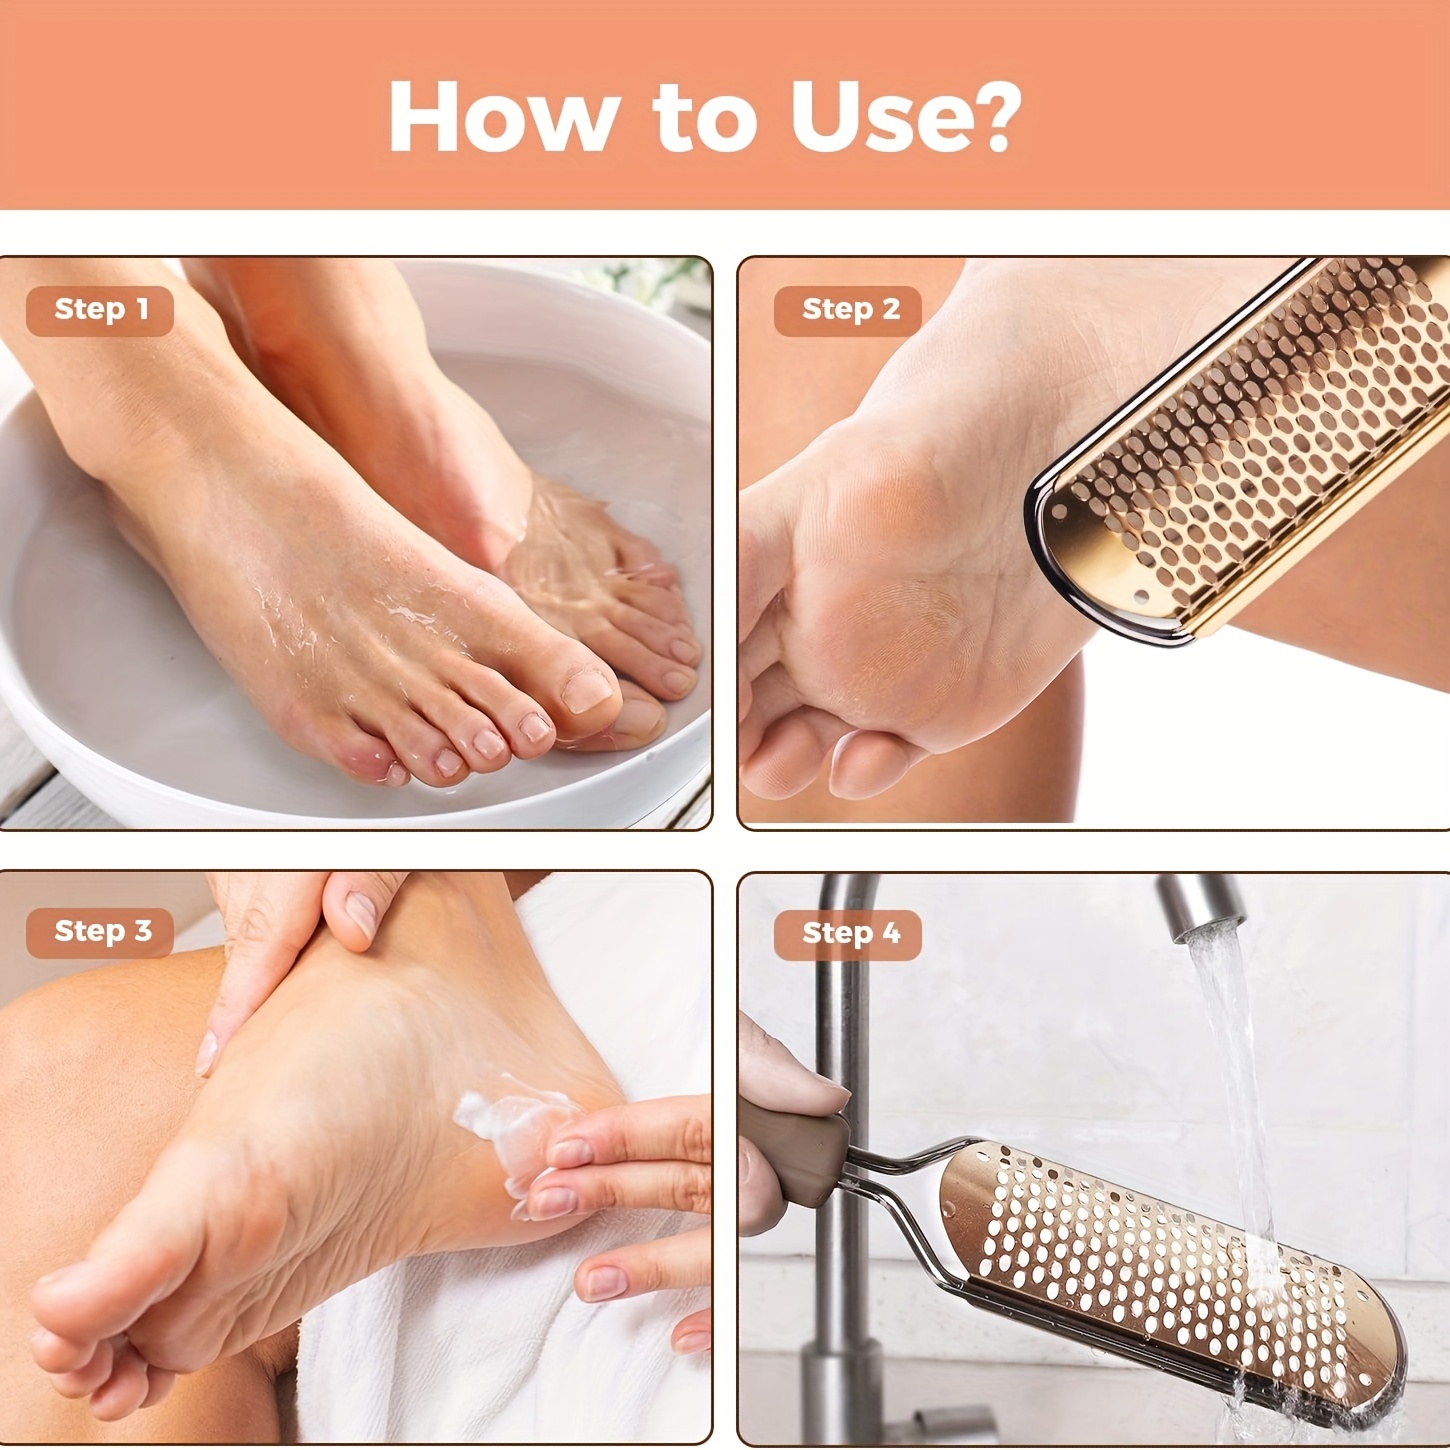 1Pcs Professional Foot Scrubber Files For Callus Remover Hard Skin